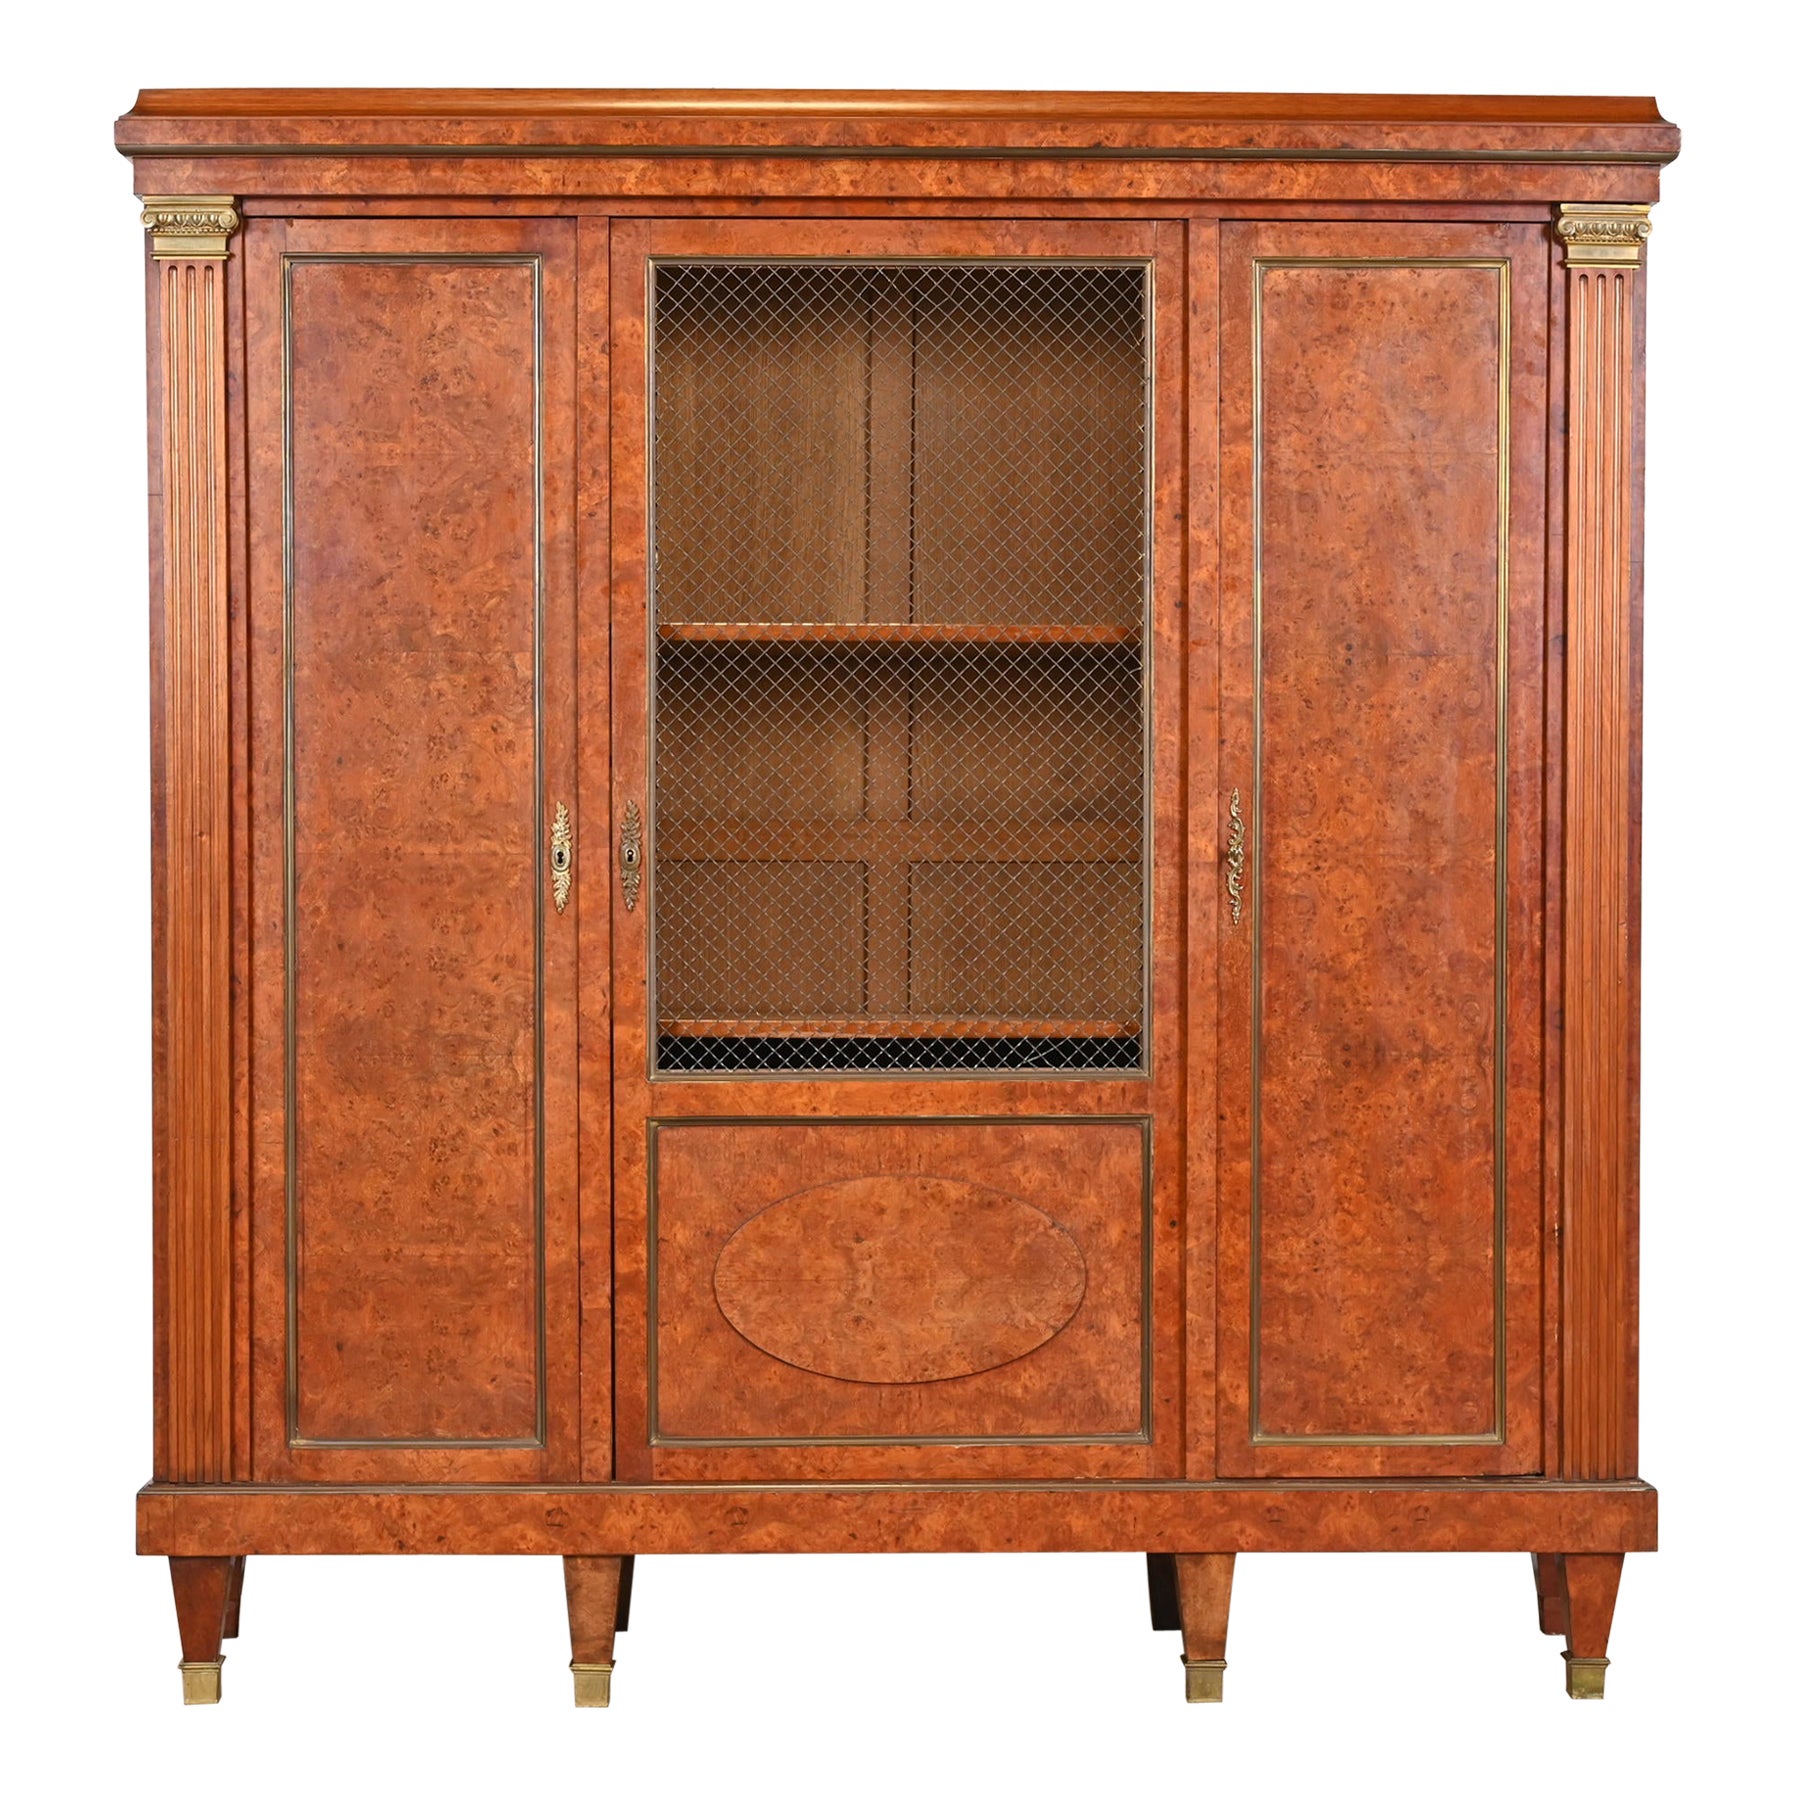 Antique French Empire Burl Wood Bibliotheque Bookcase Cabinet, Circa 1880s For Sale